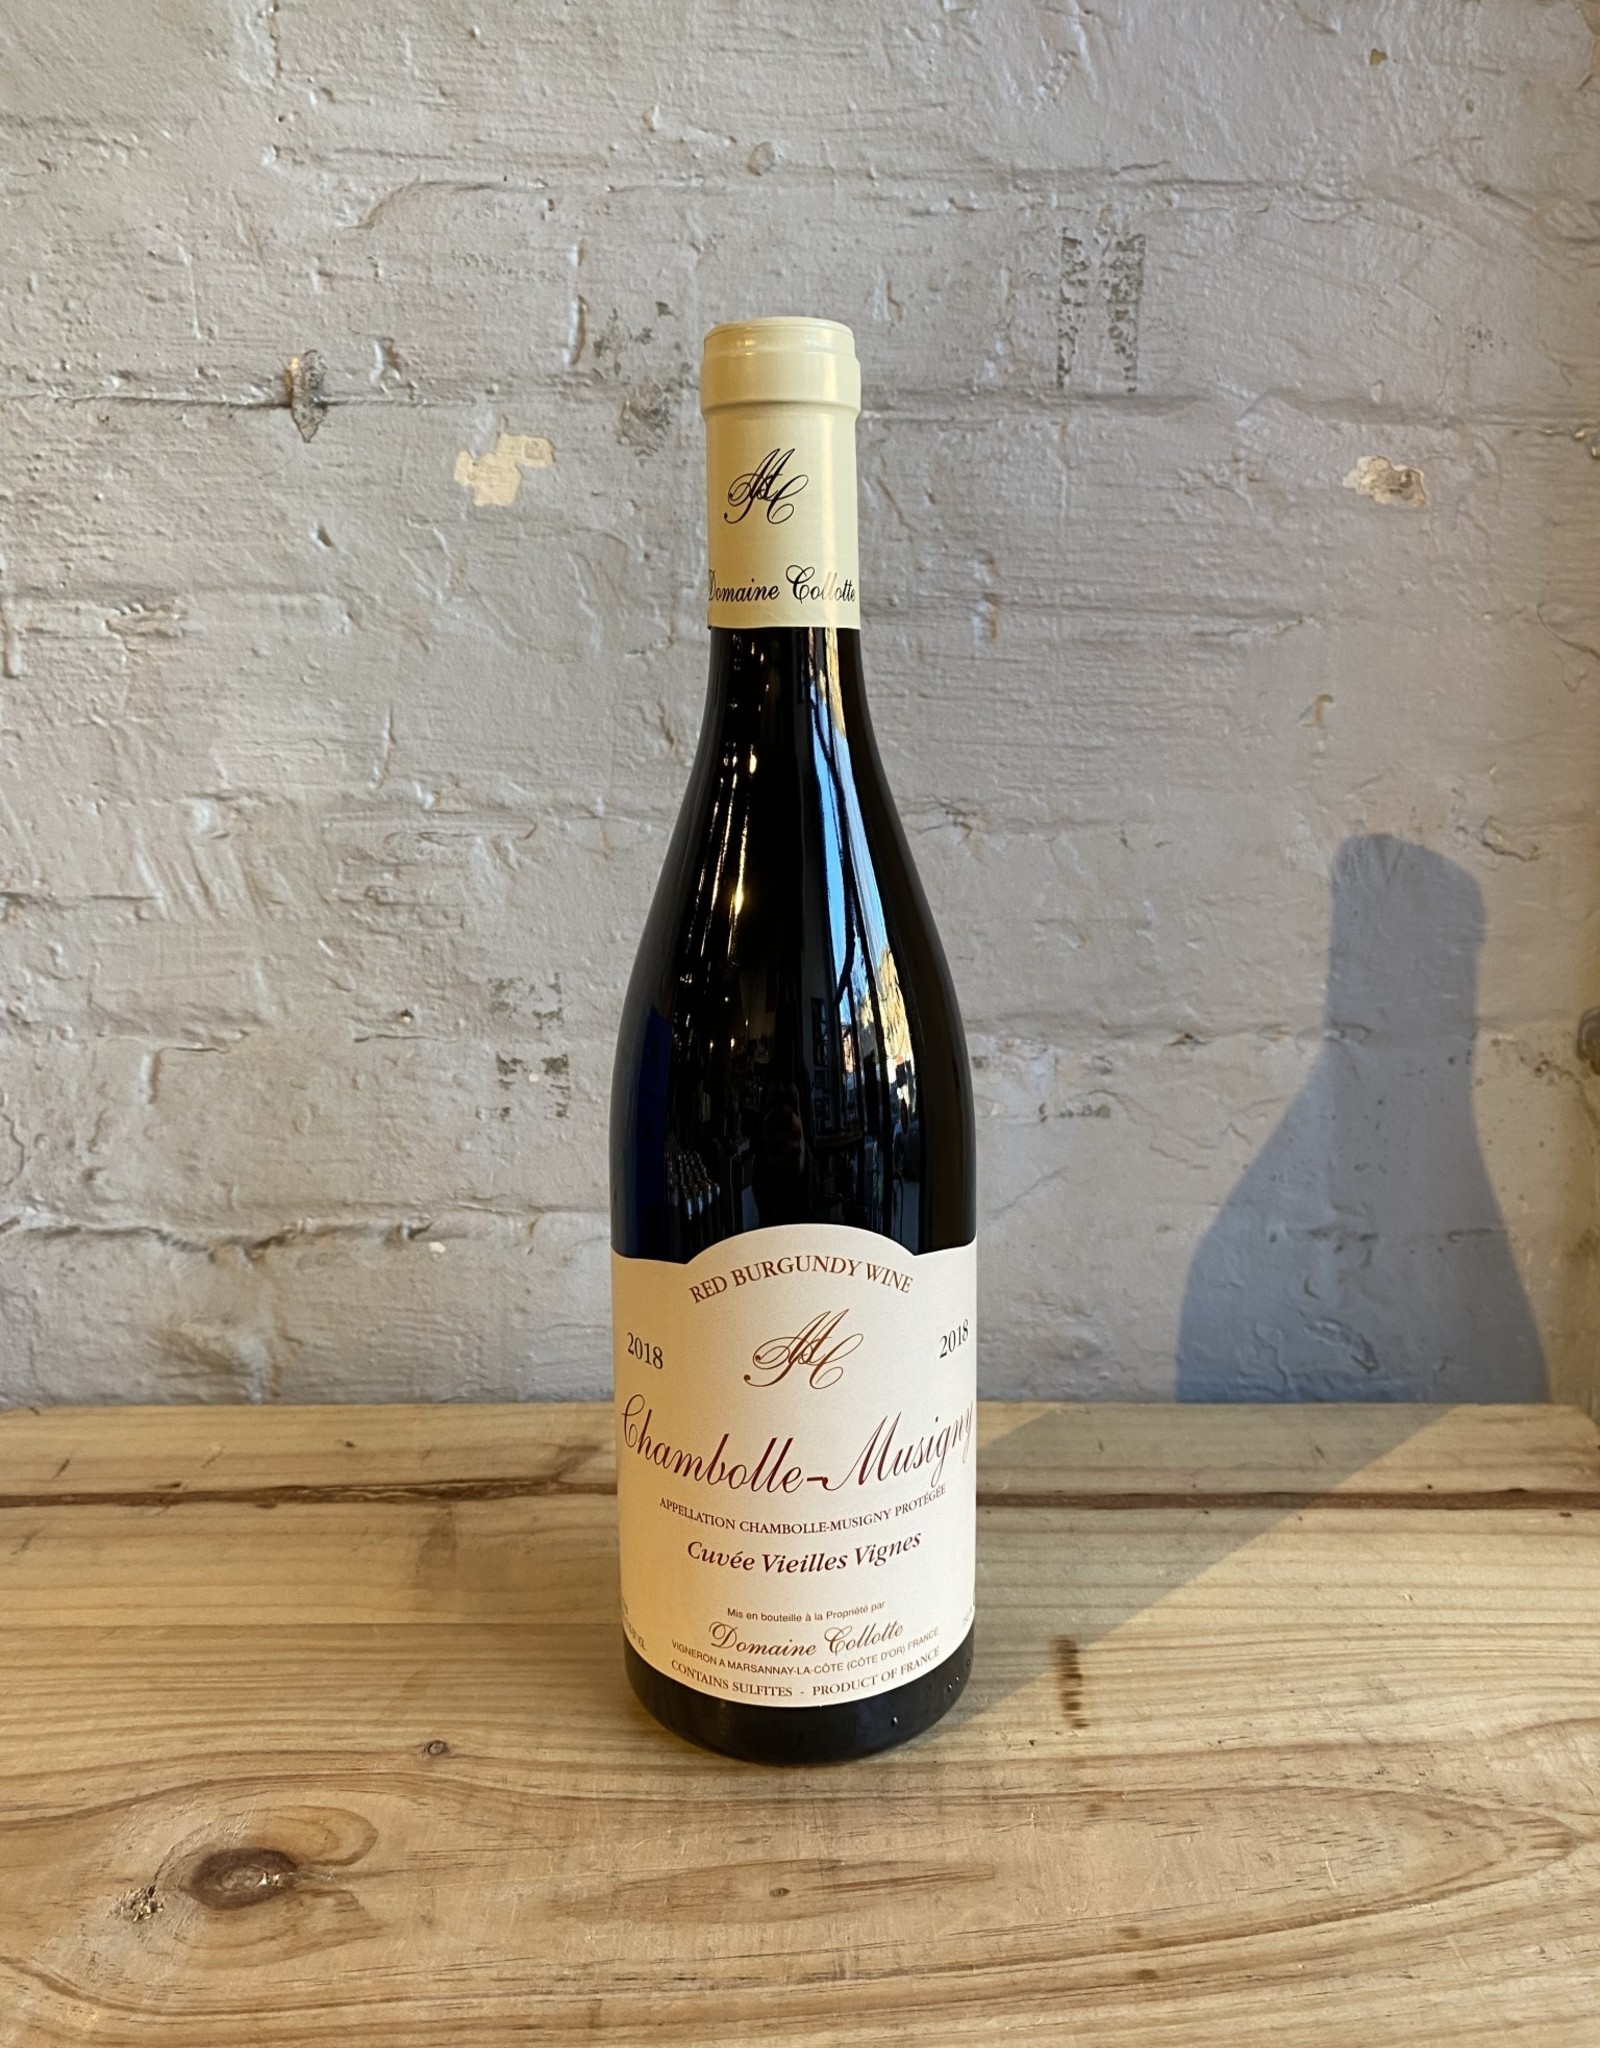 Wine 2018 Domaine Collotte Chambolle Musigny Cuvée Vieilles Vignes - Burgundy, France (750ml)